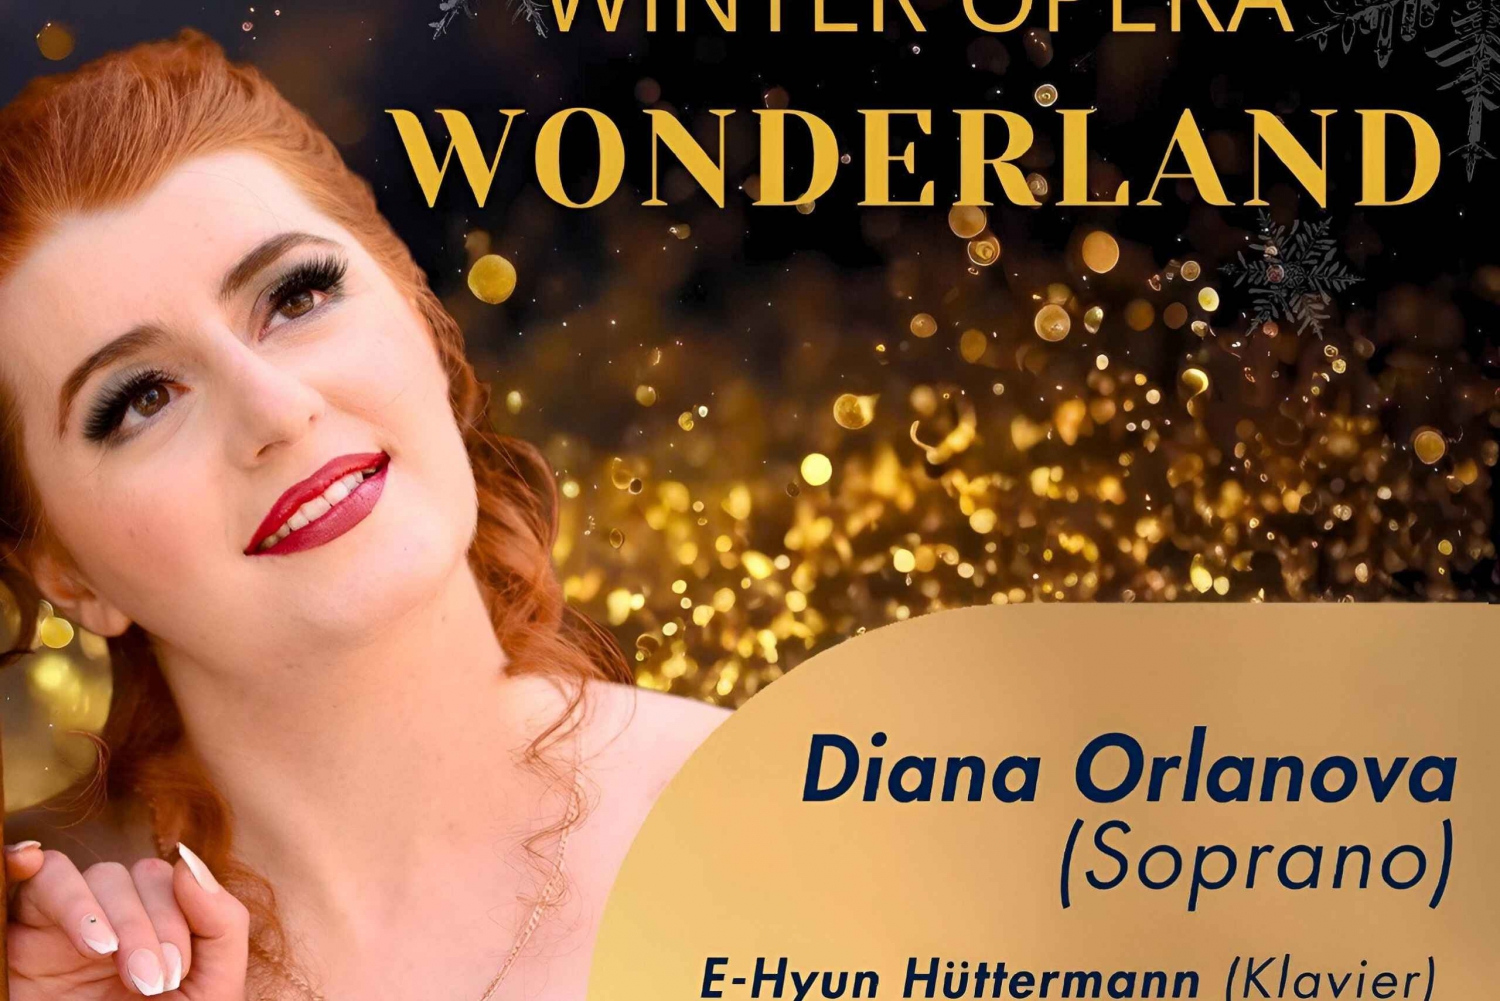 Vinteroperans underland: Tematisk operakonsert i Wien